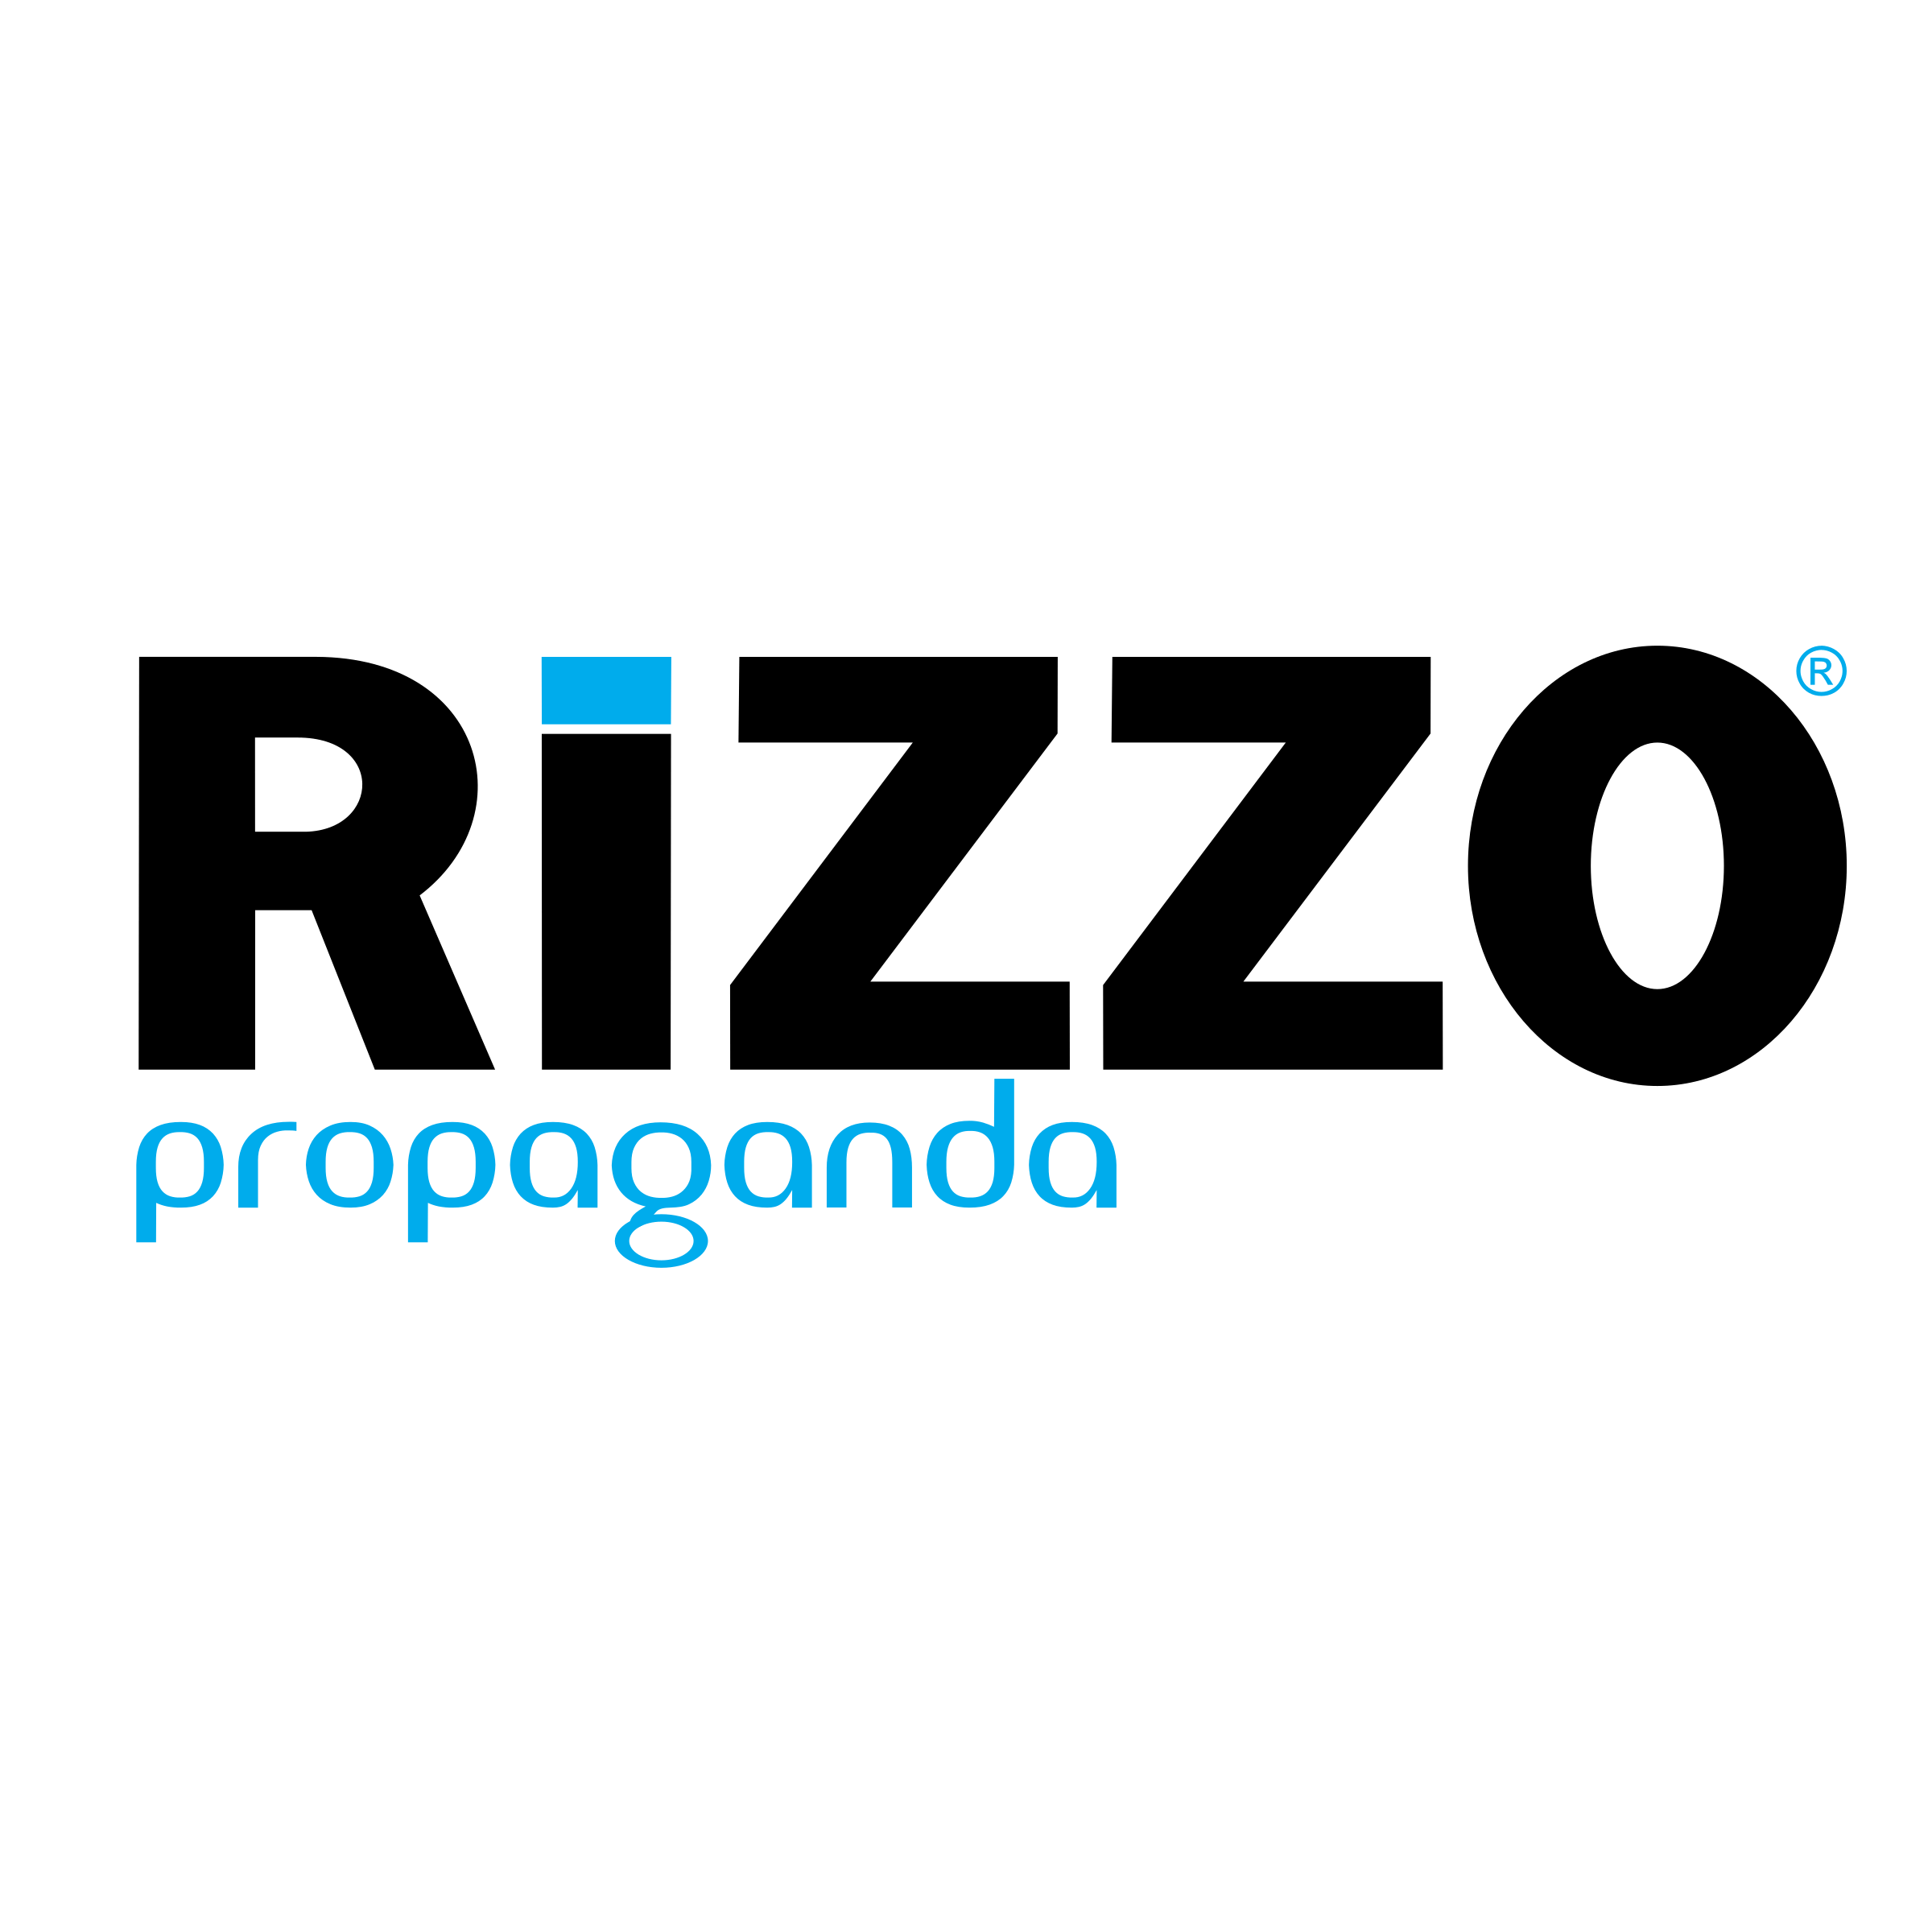 Propaganda Logo - Rizzo Propaganda Logo PNG Transparent & SVG Vector